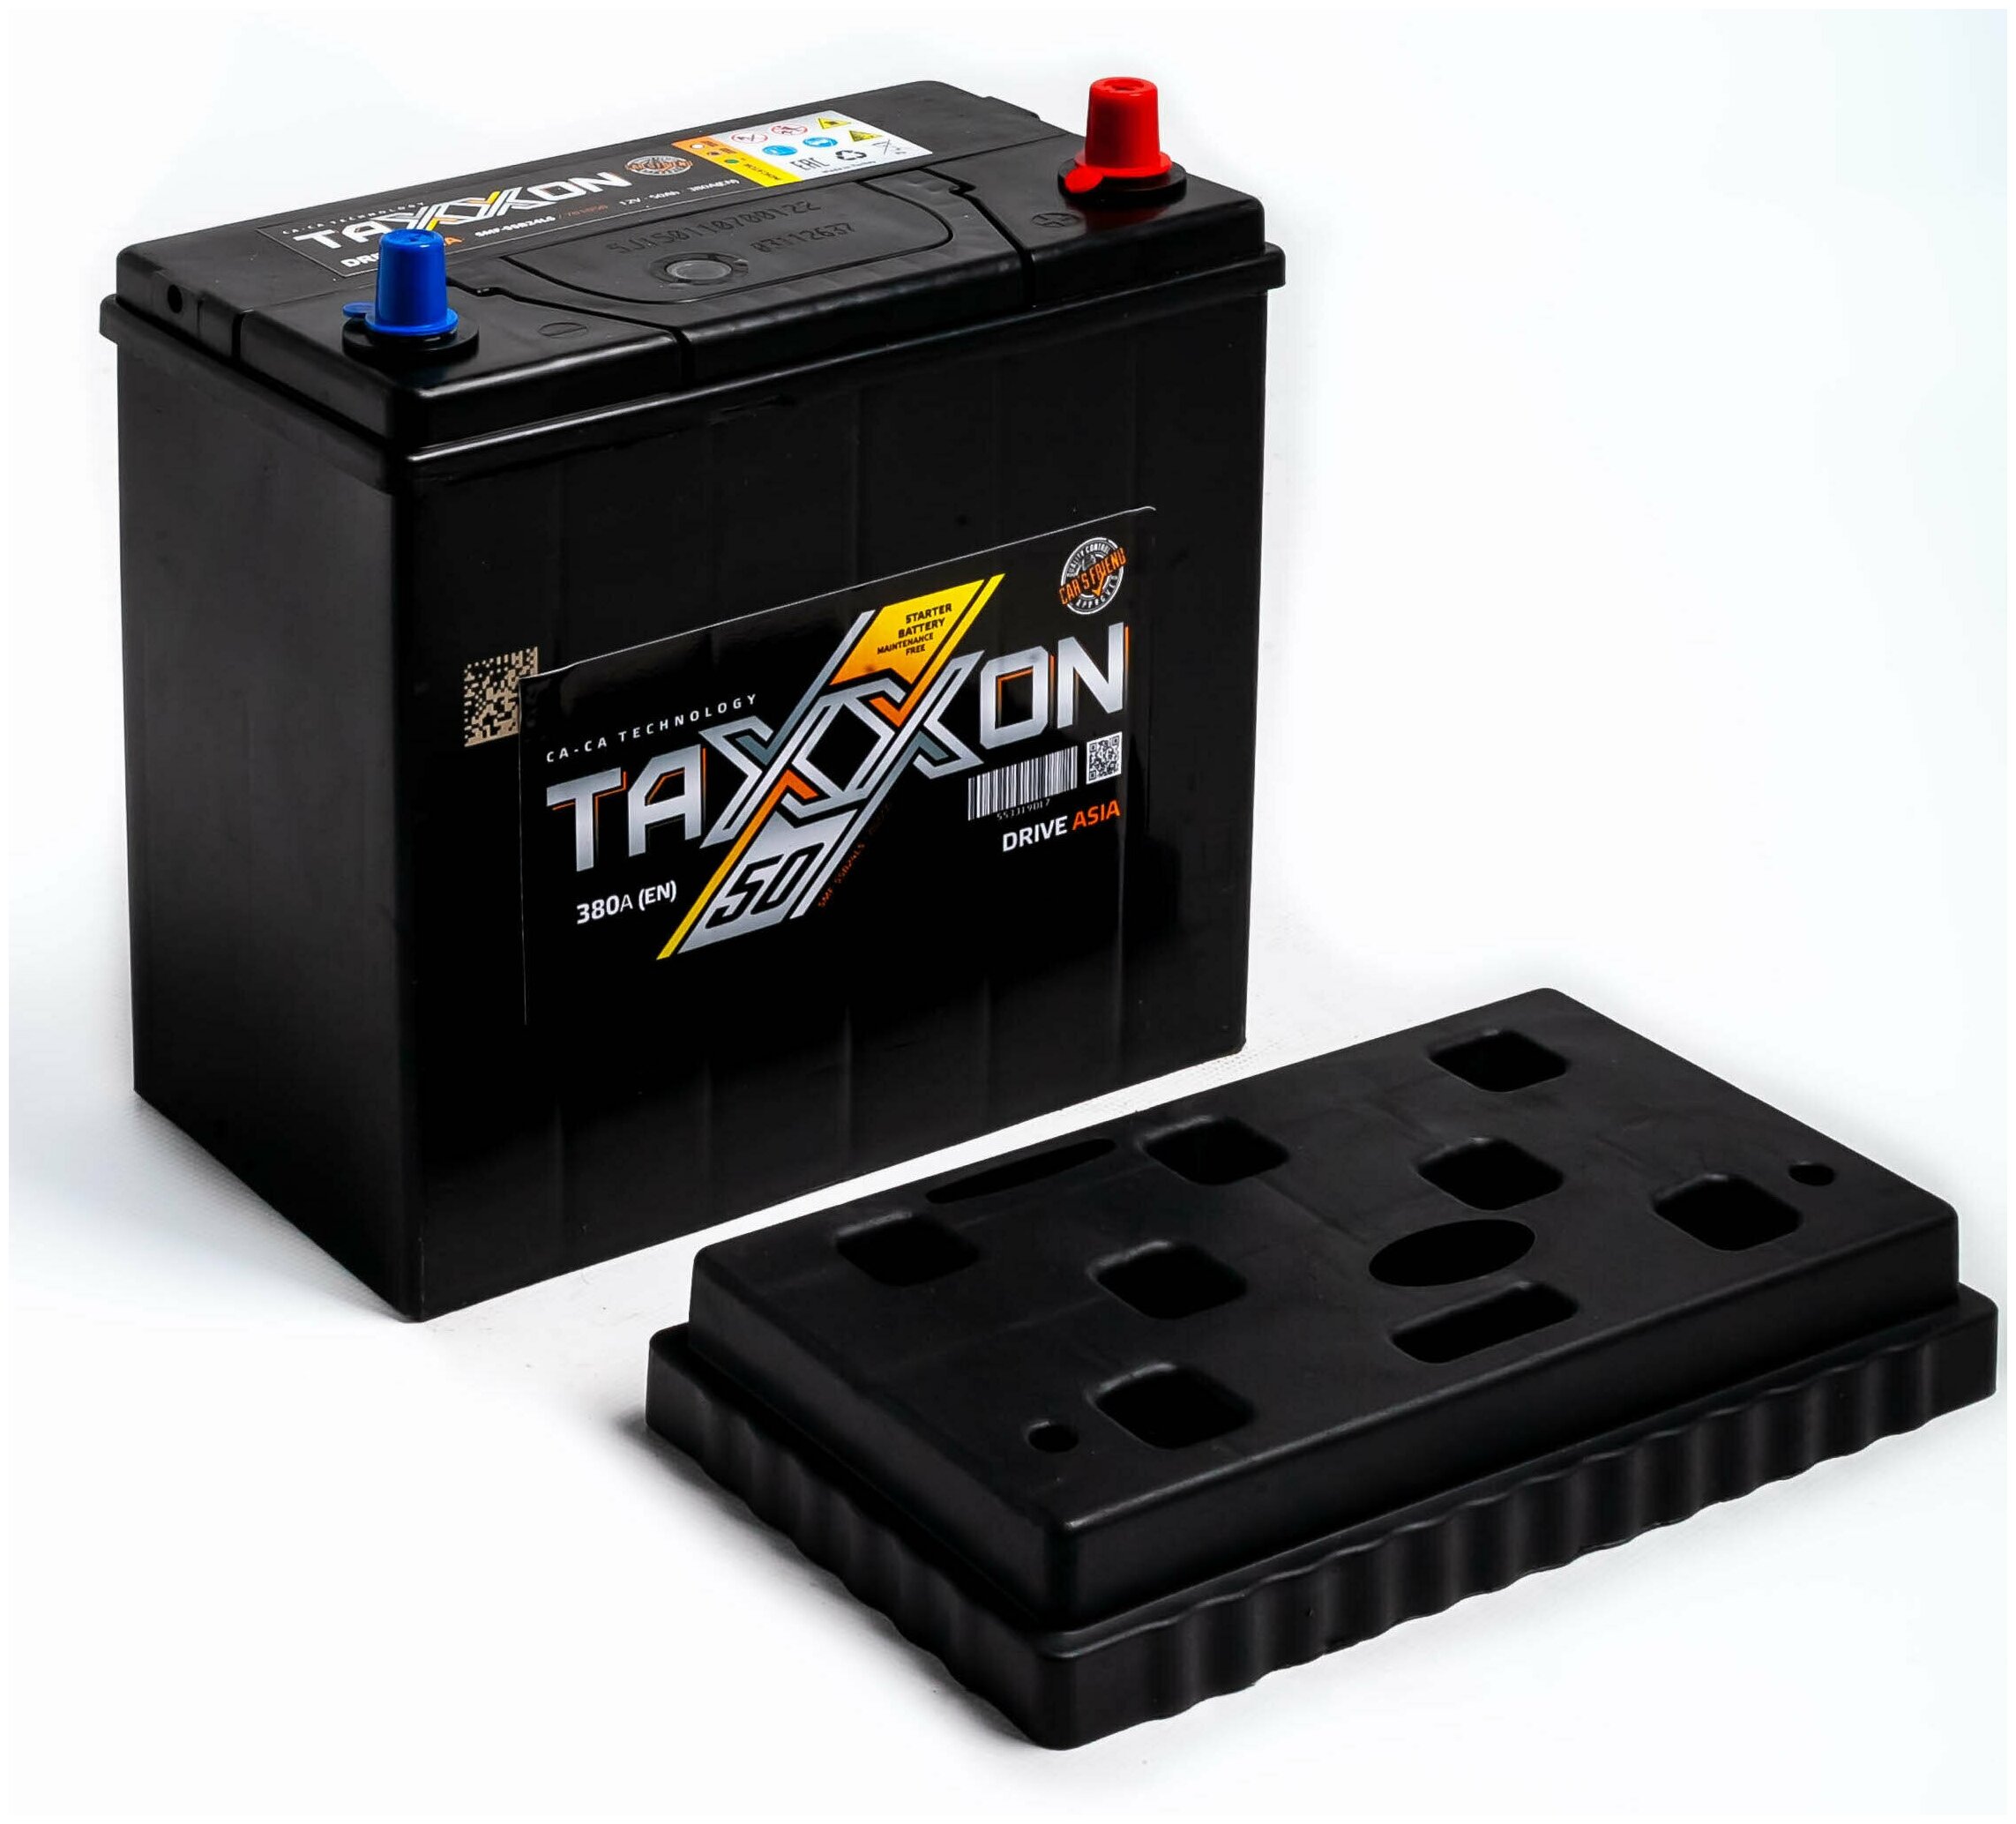 Аккумулятор автомобильный TAXXON DRIVE ASIA 50ah R+